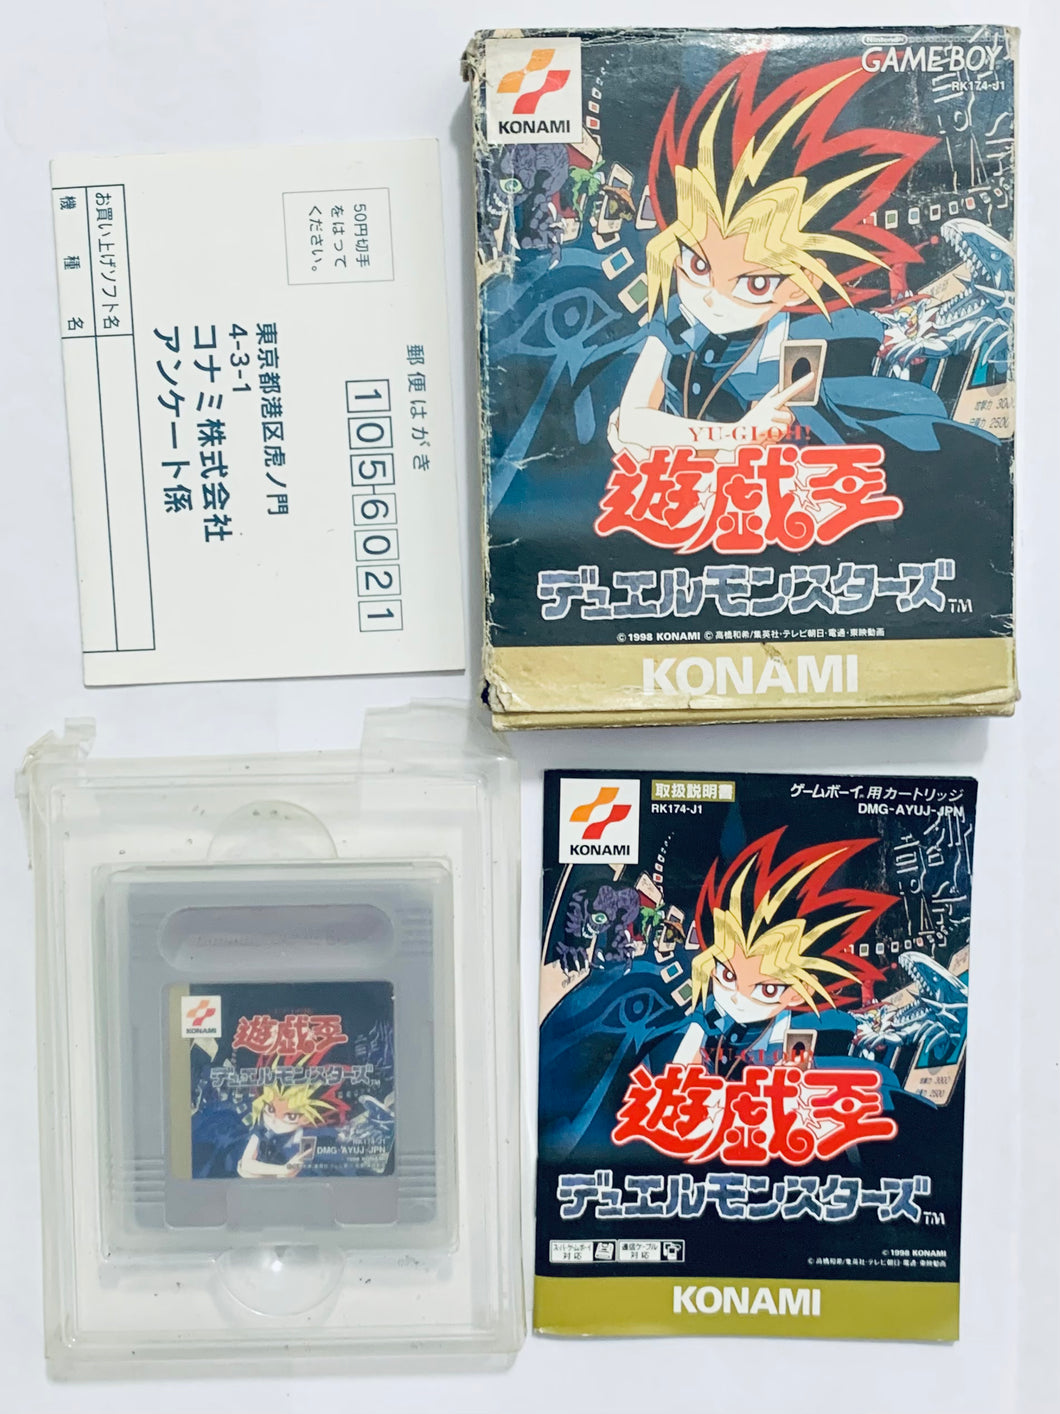 Yu-Gi-Oh! Duel Monsters - GameBoy - Game Boy - Pocket - GBC - GBA - JP - CIB (DMG-AYUJ-JPN)